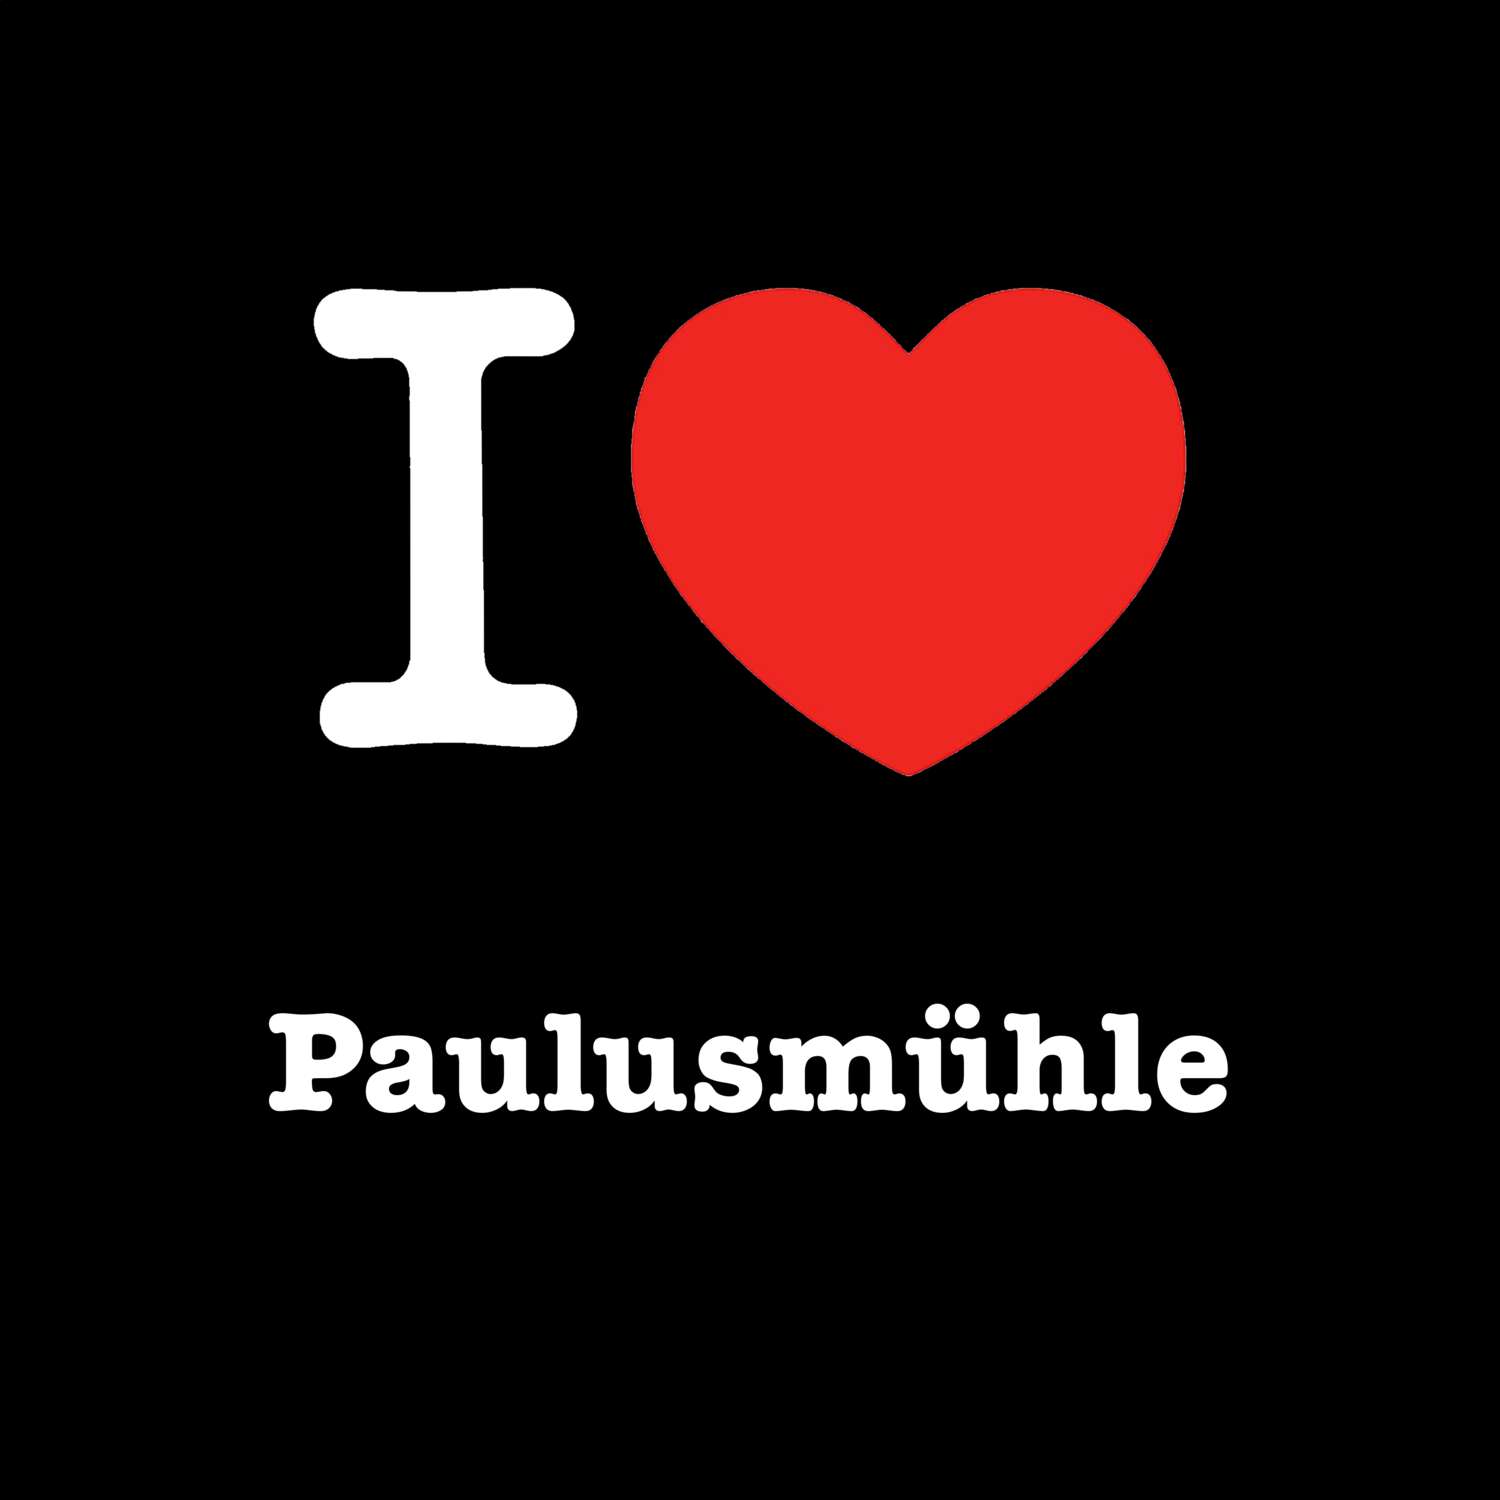 Paulusmühle T-Shirt »I love«